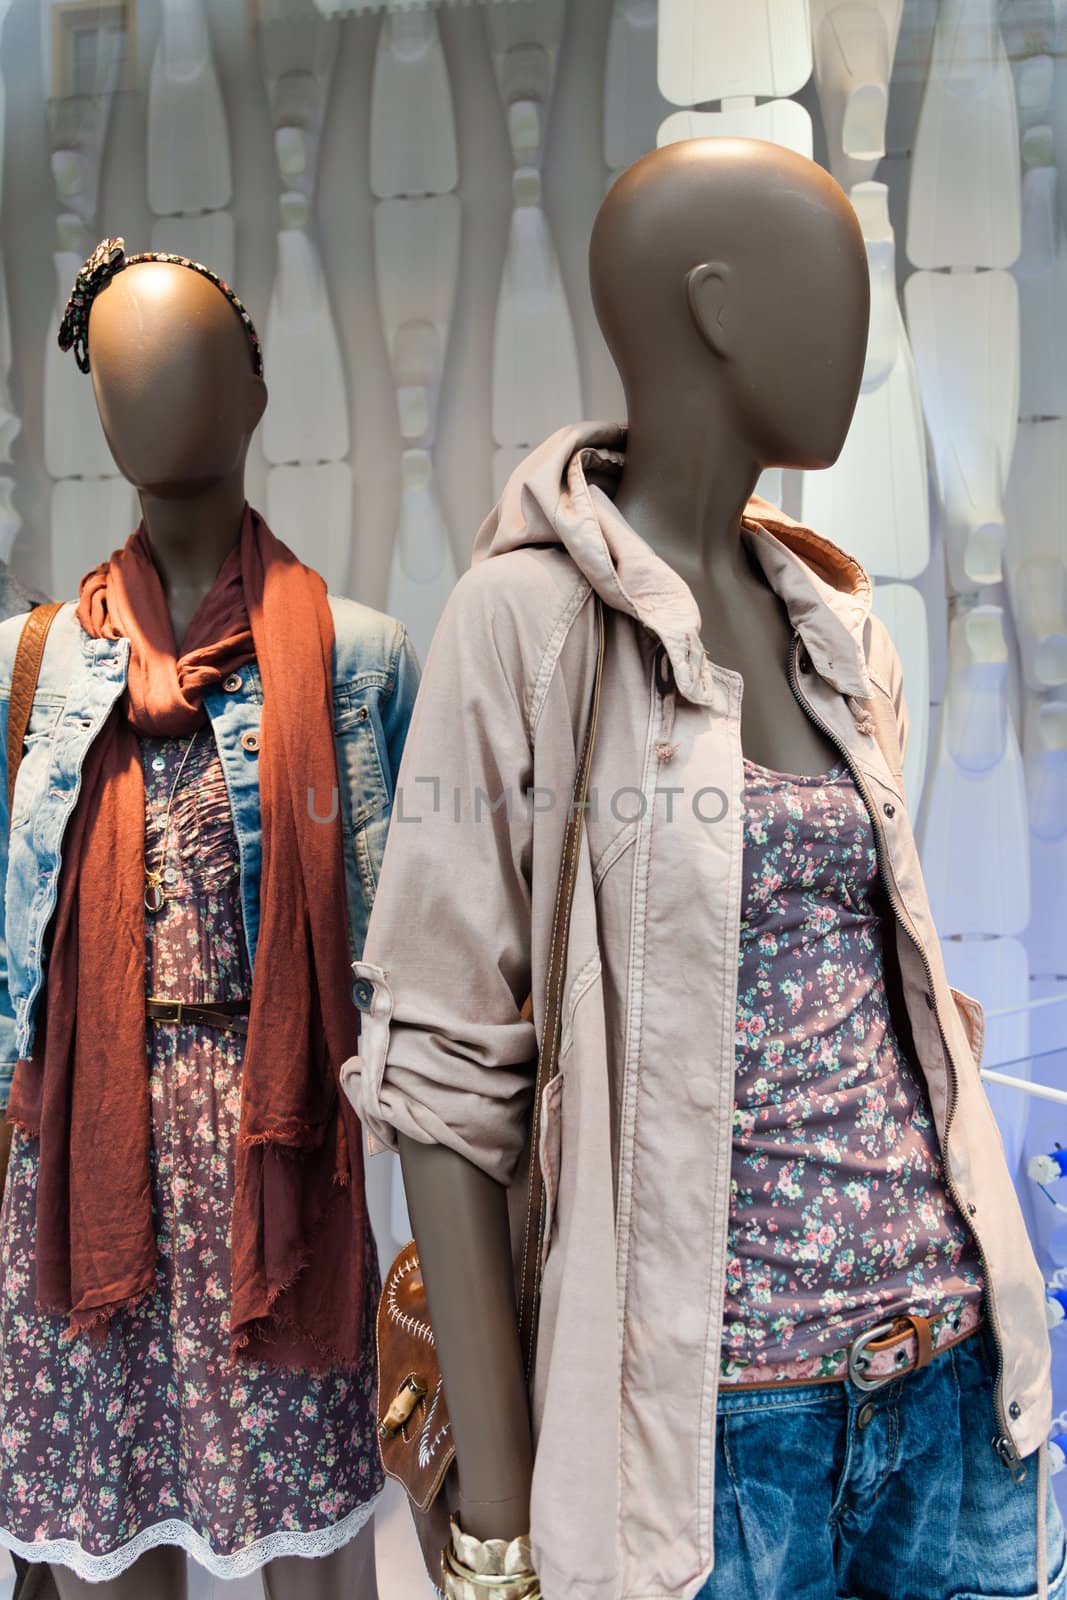 Two fashion models in a shop window.